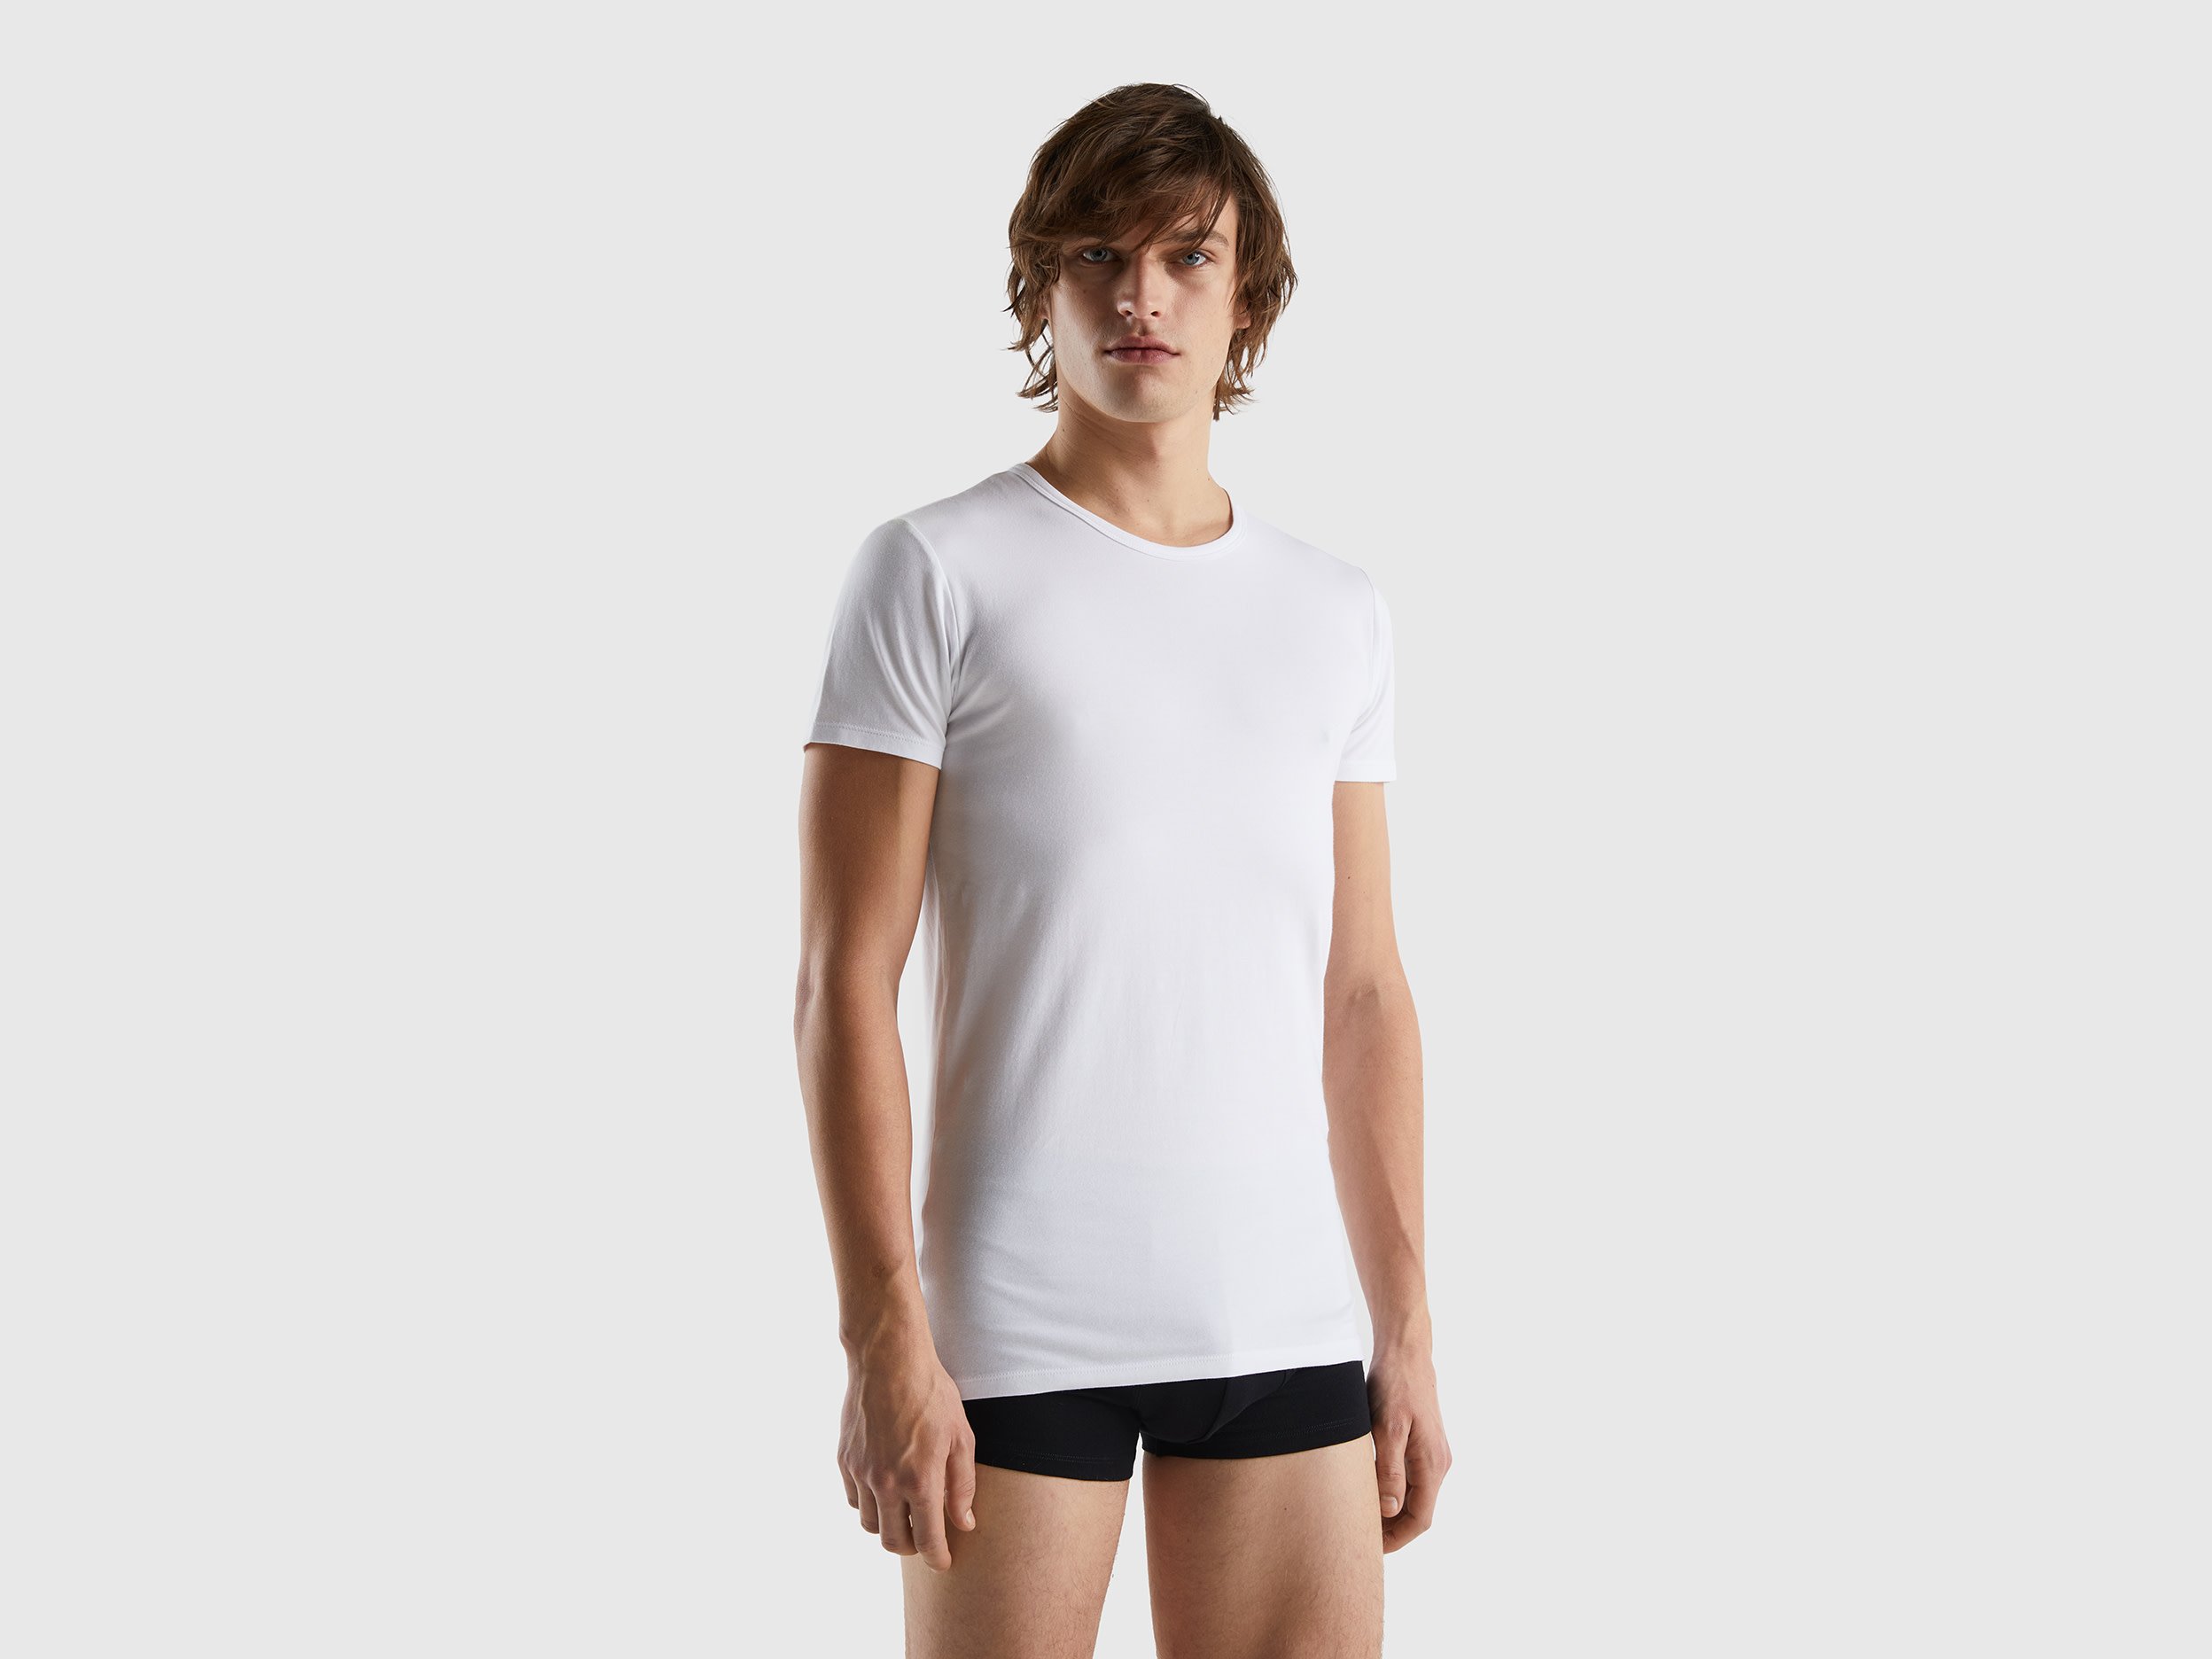 Benetton, Organic Stretch Cotton T-shirt, size S, White, Men